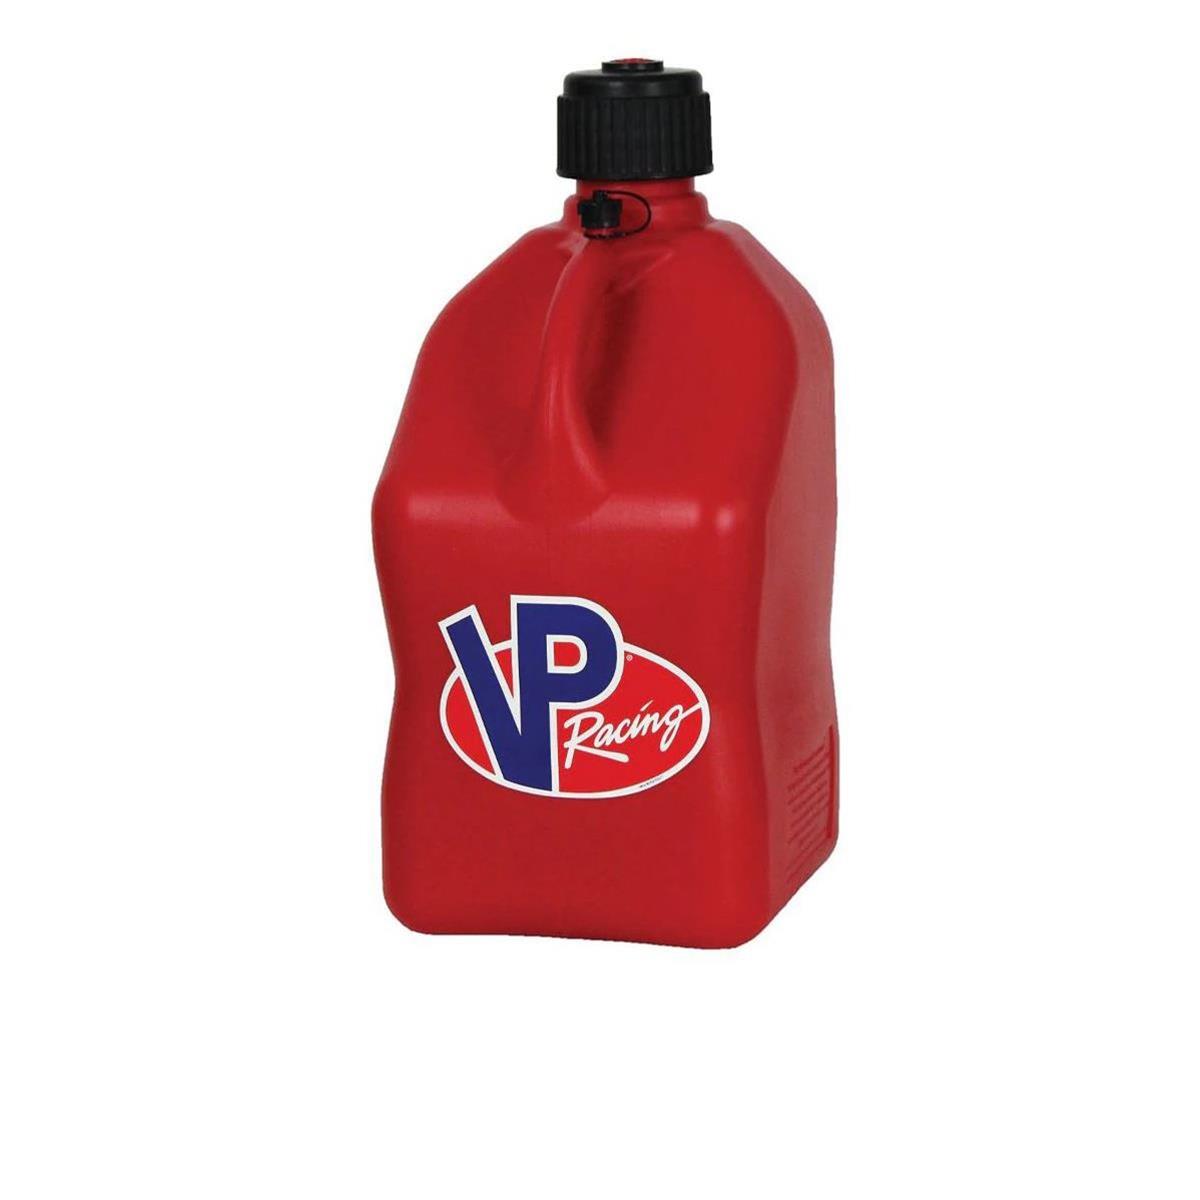 VP Racing Motorsports Fuel Jug - 5.5 gallons - Red